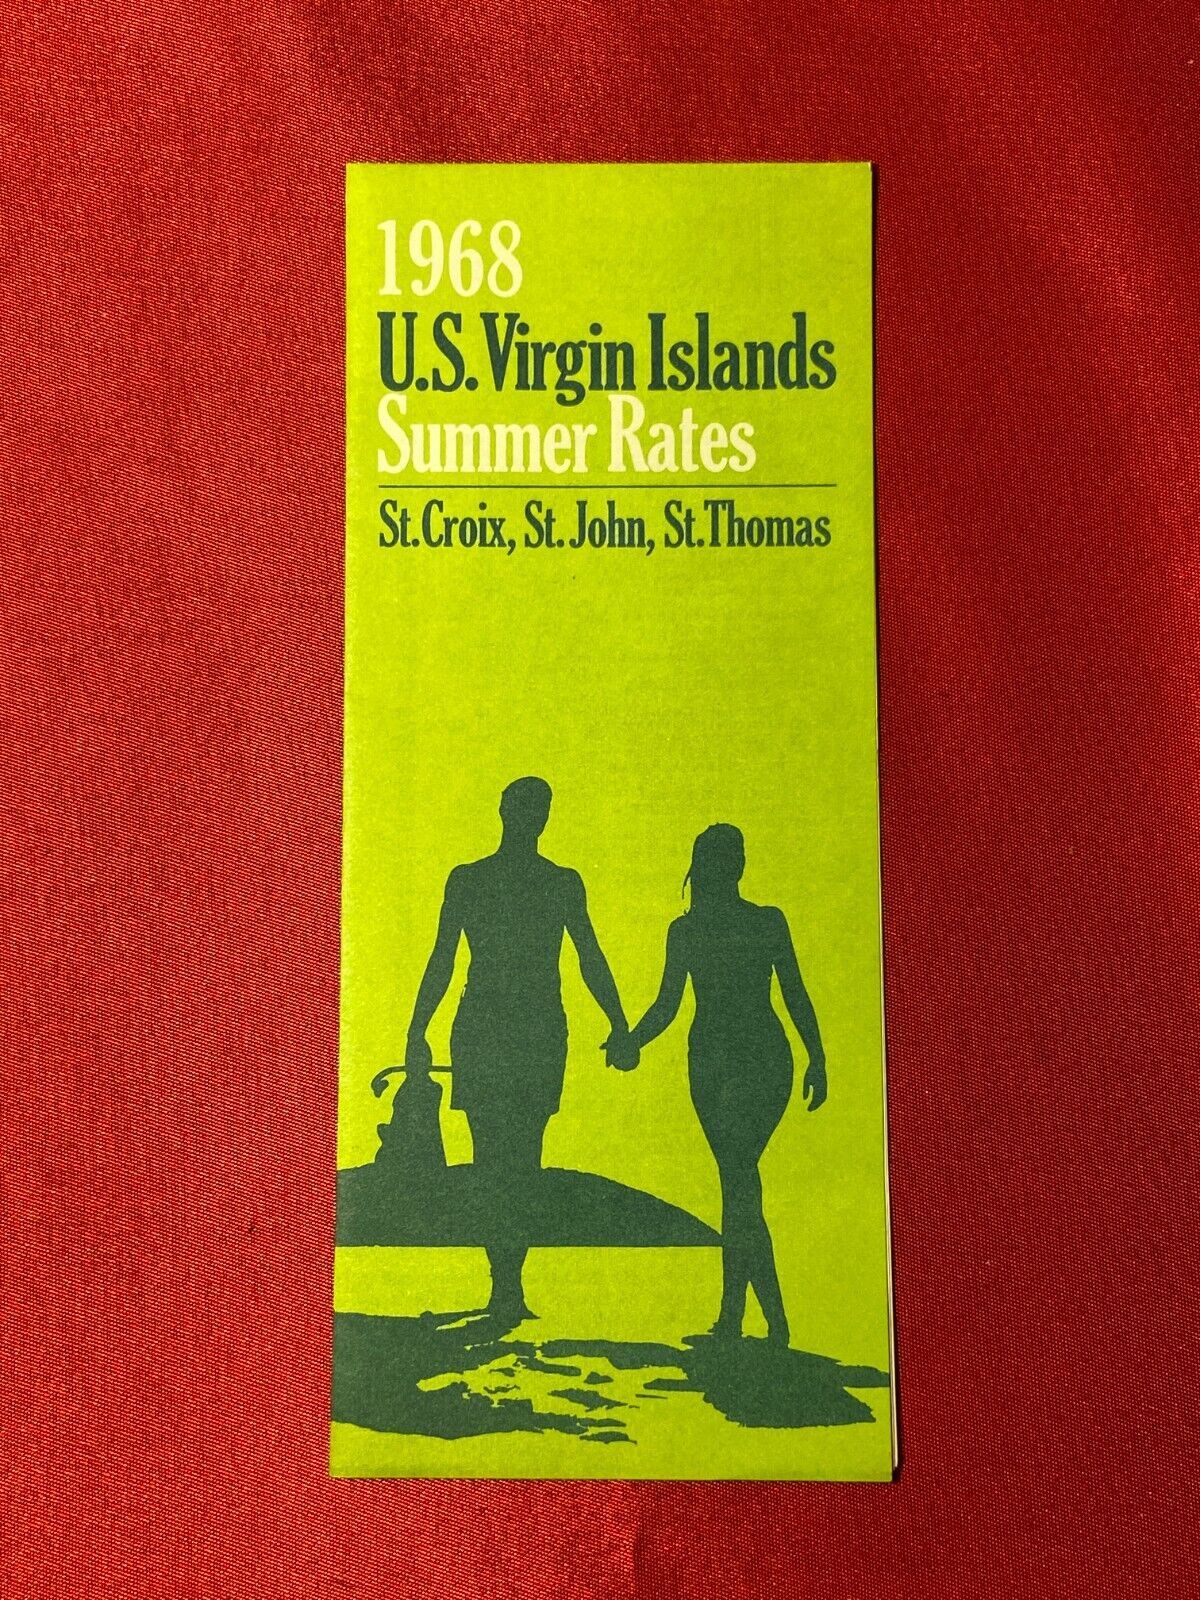 1968 U.s. Virgin Islands Summer Rates Brochure St. Croix St. John St. Thomas